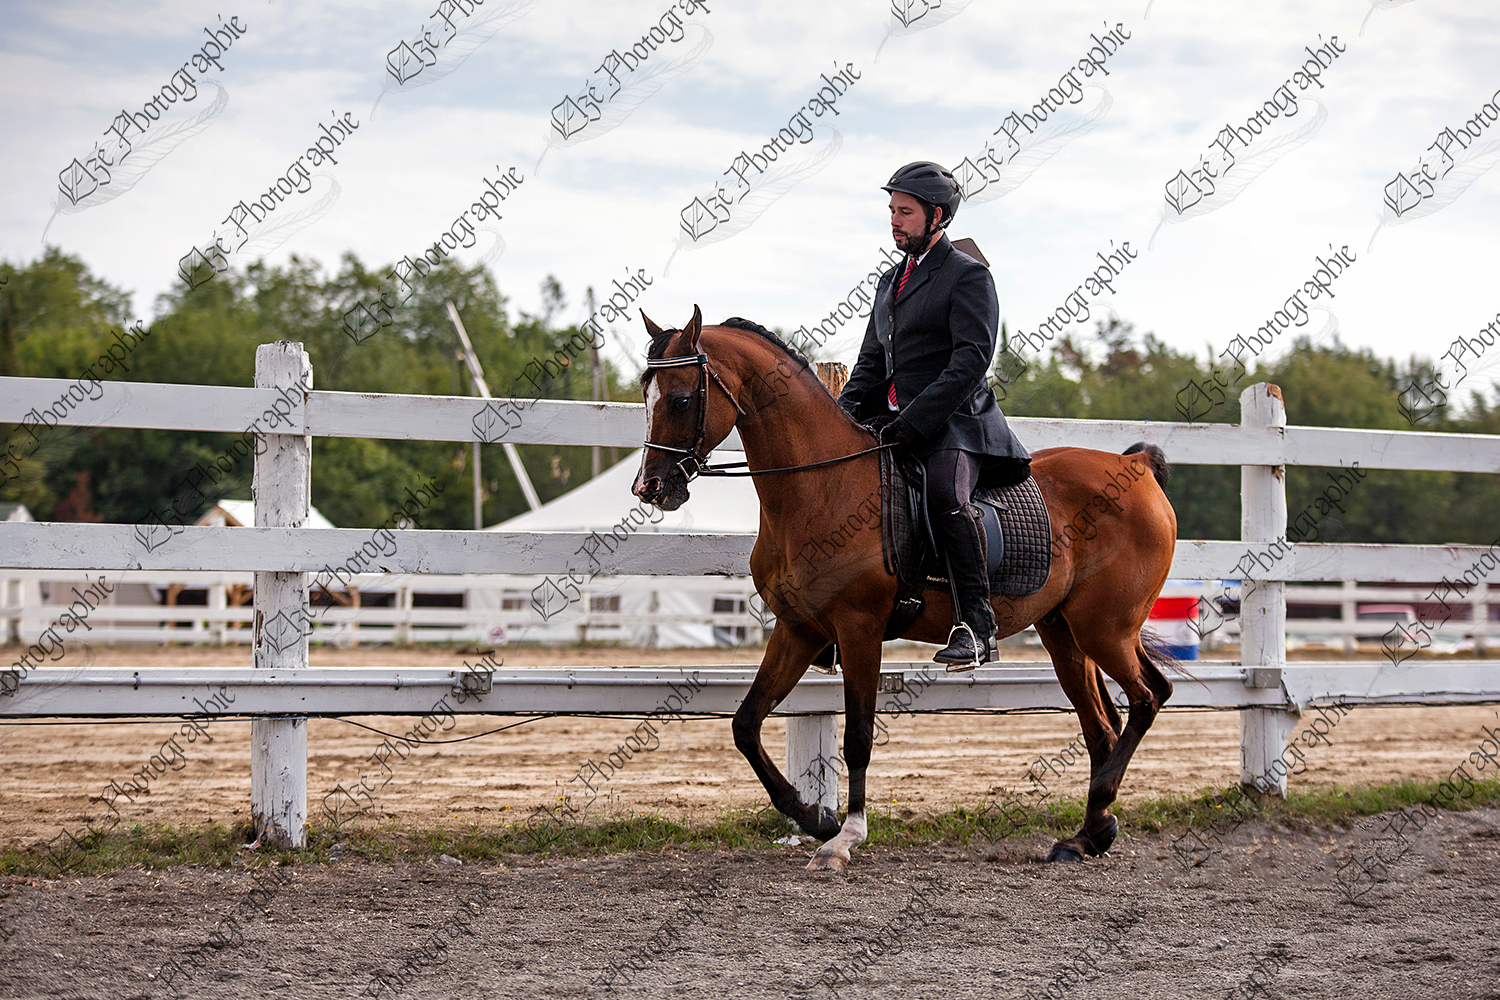 elze_photo_5461_cheval_competition_etrier_horse_equestrian_show